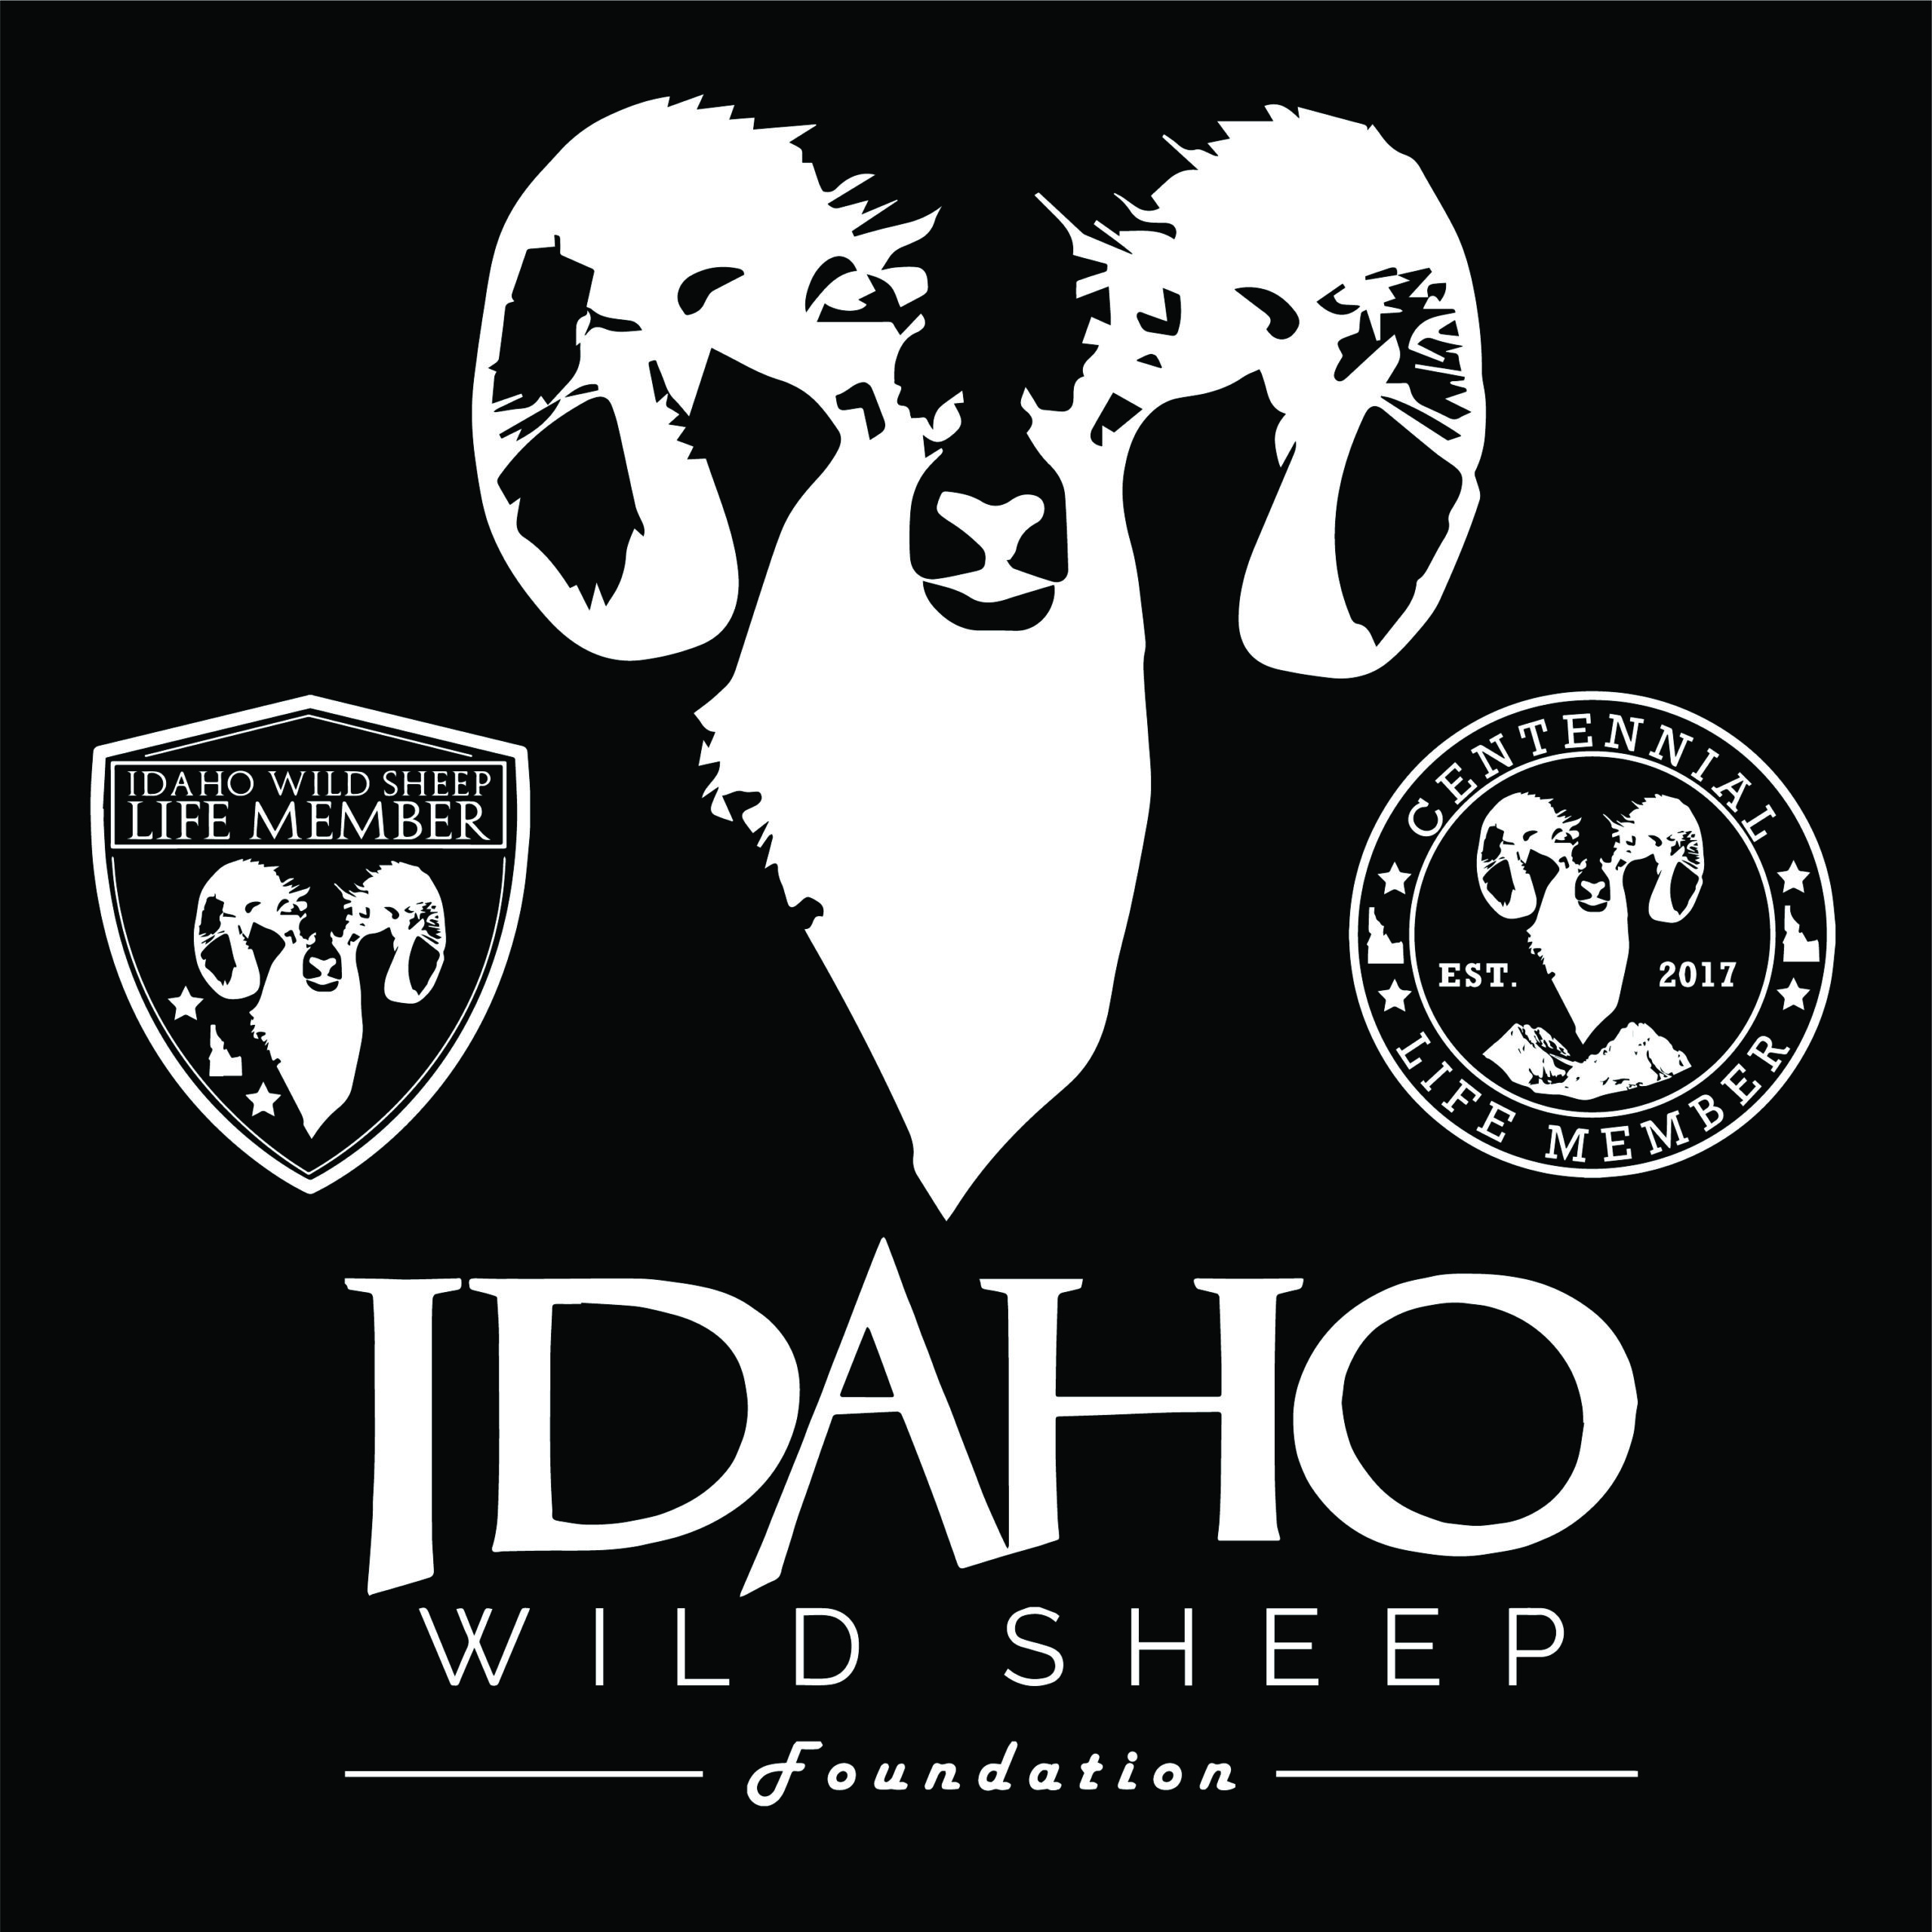 Bighorn sheep - Idaho Wild Sheep Foundation.